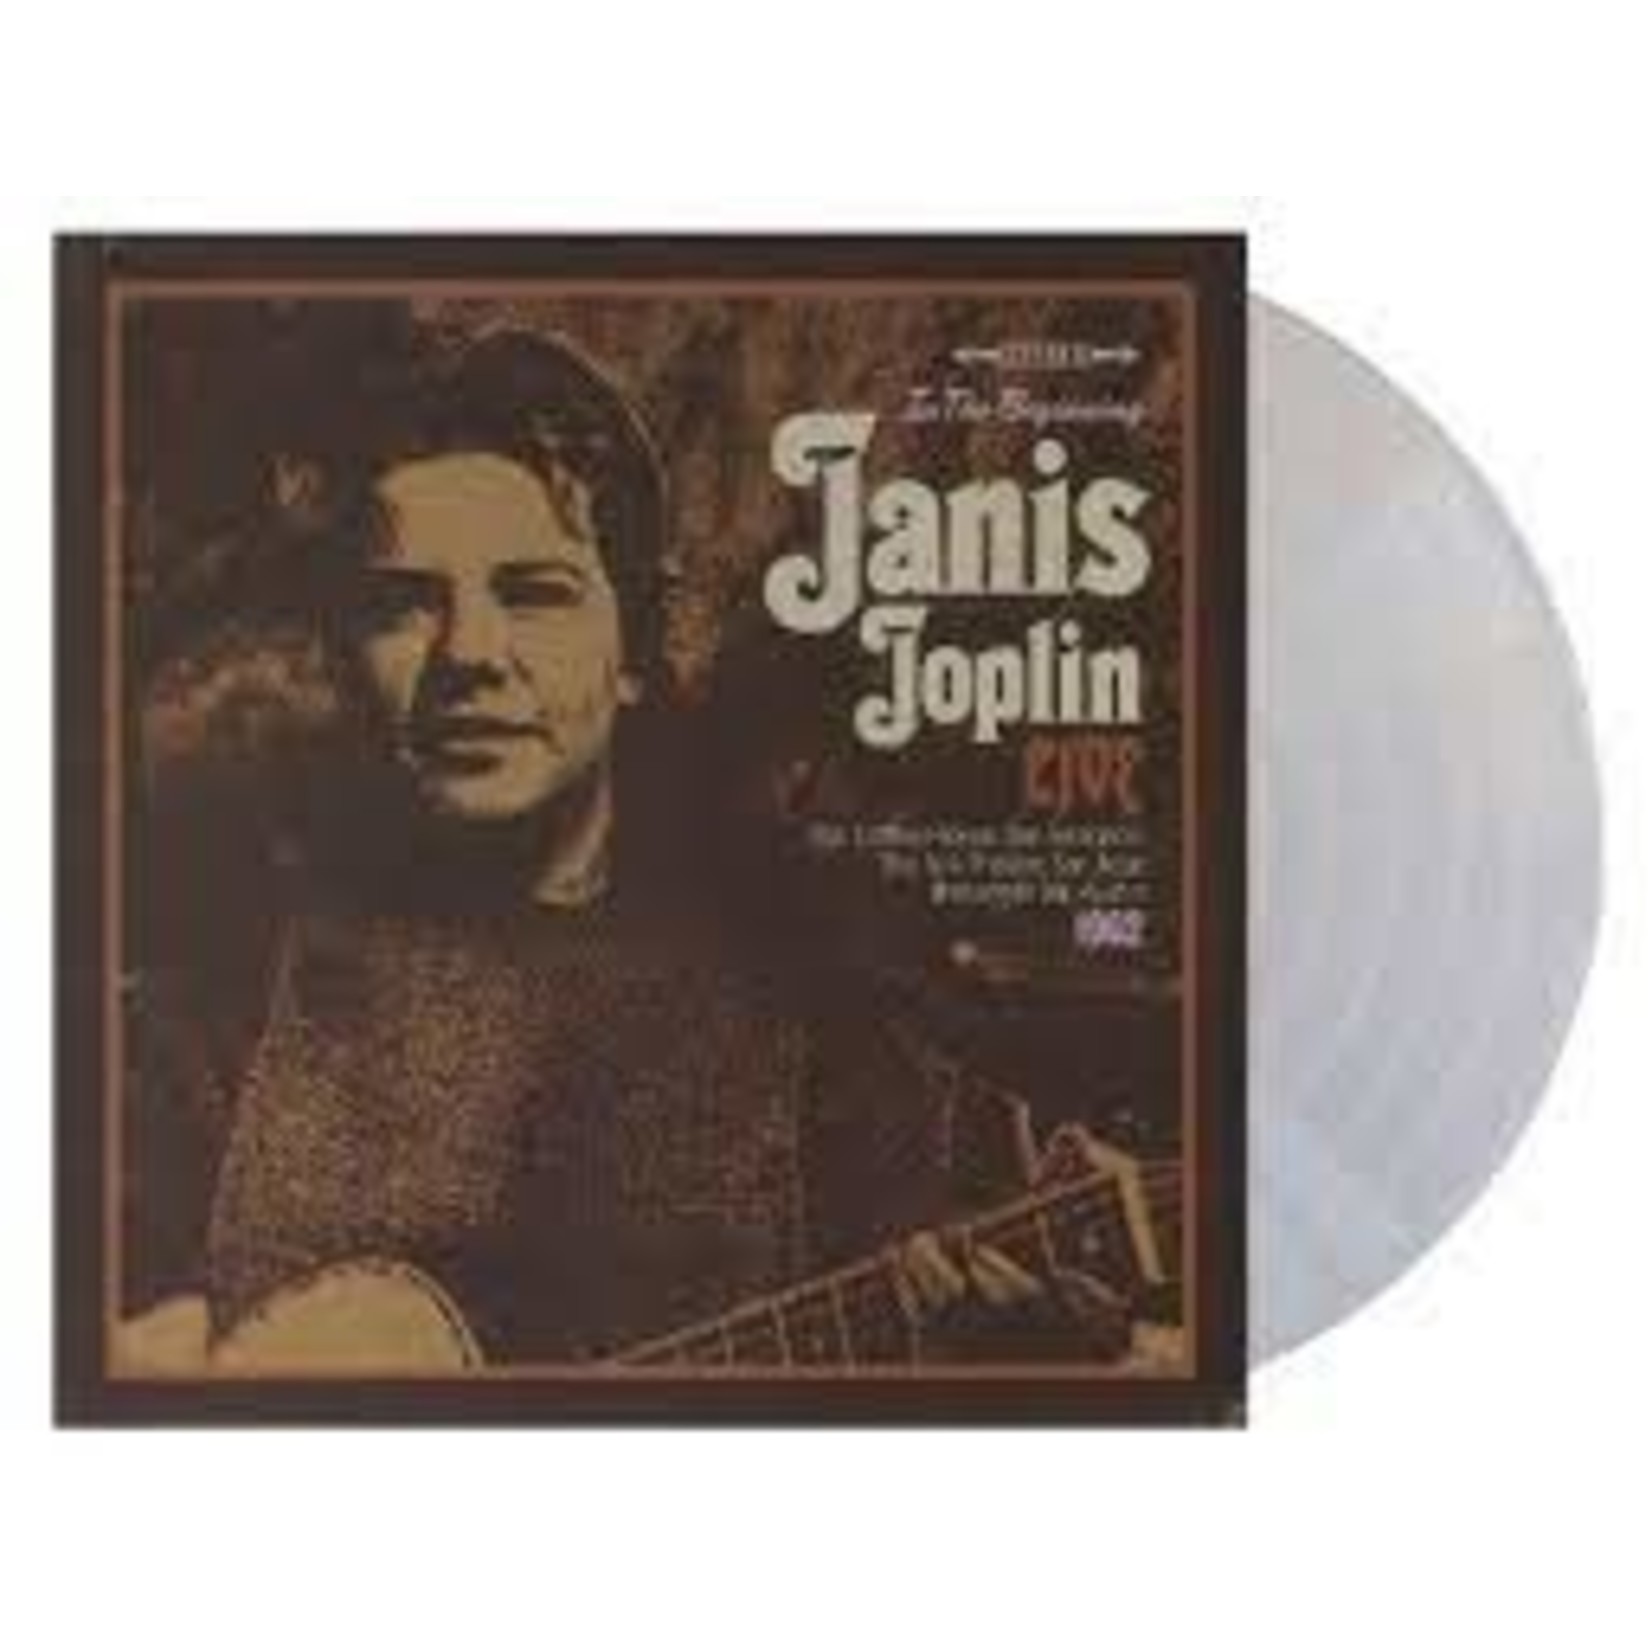 JANIS JOPLIN - live 1962 LP